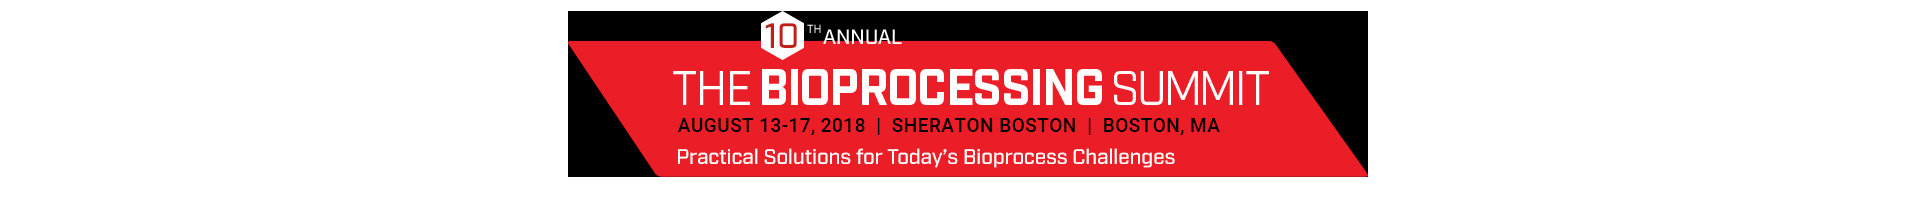 Bioprocessing summit, Boston (USA), August 13-17th, 2018